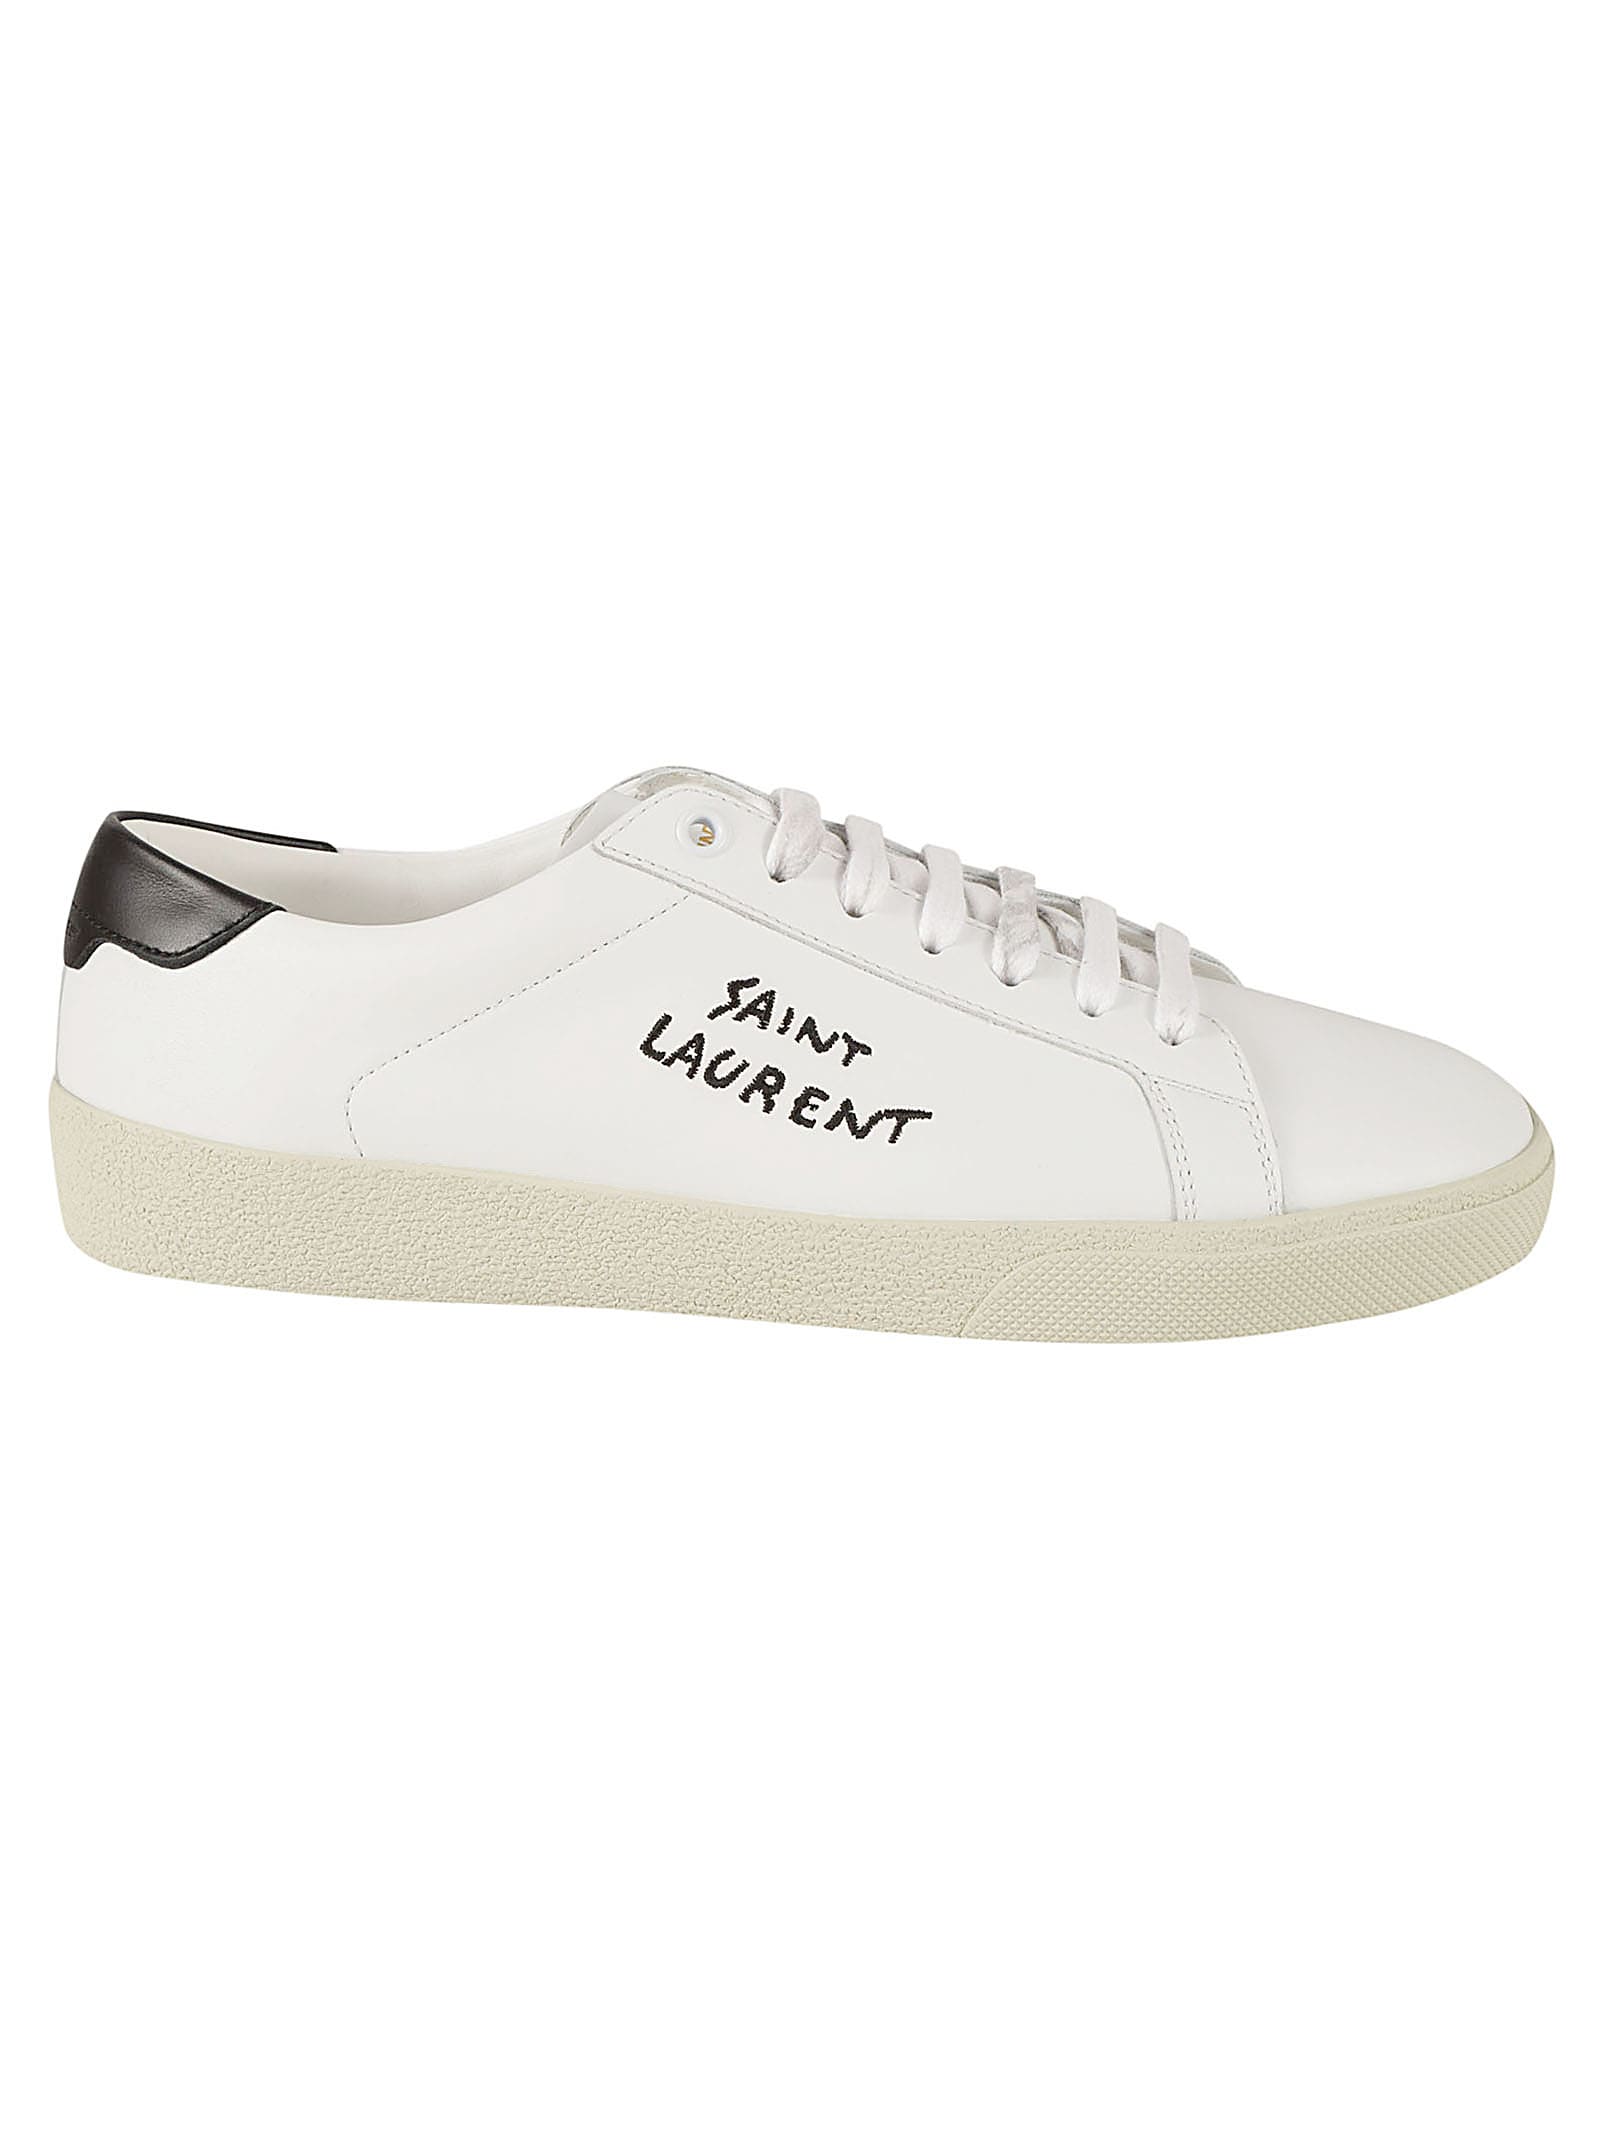 Saint Laurent Sl06 Signature Low Top Sneakers In Optic White